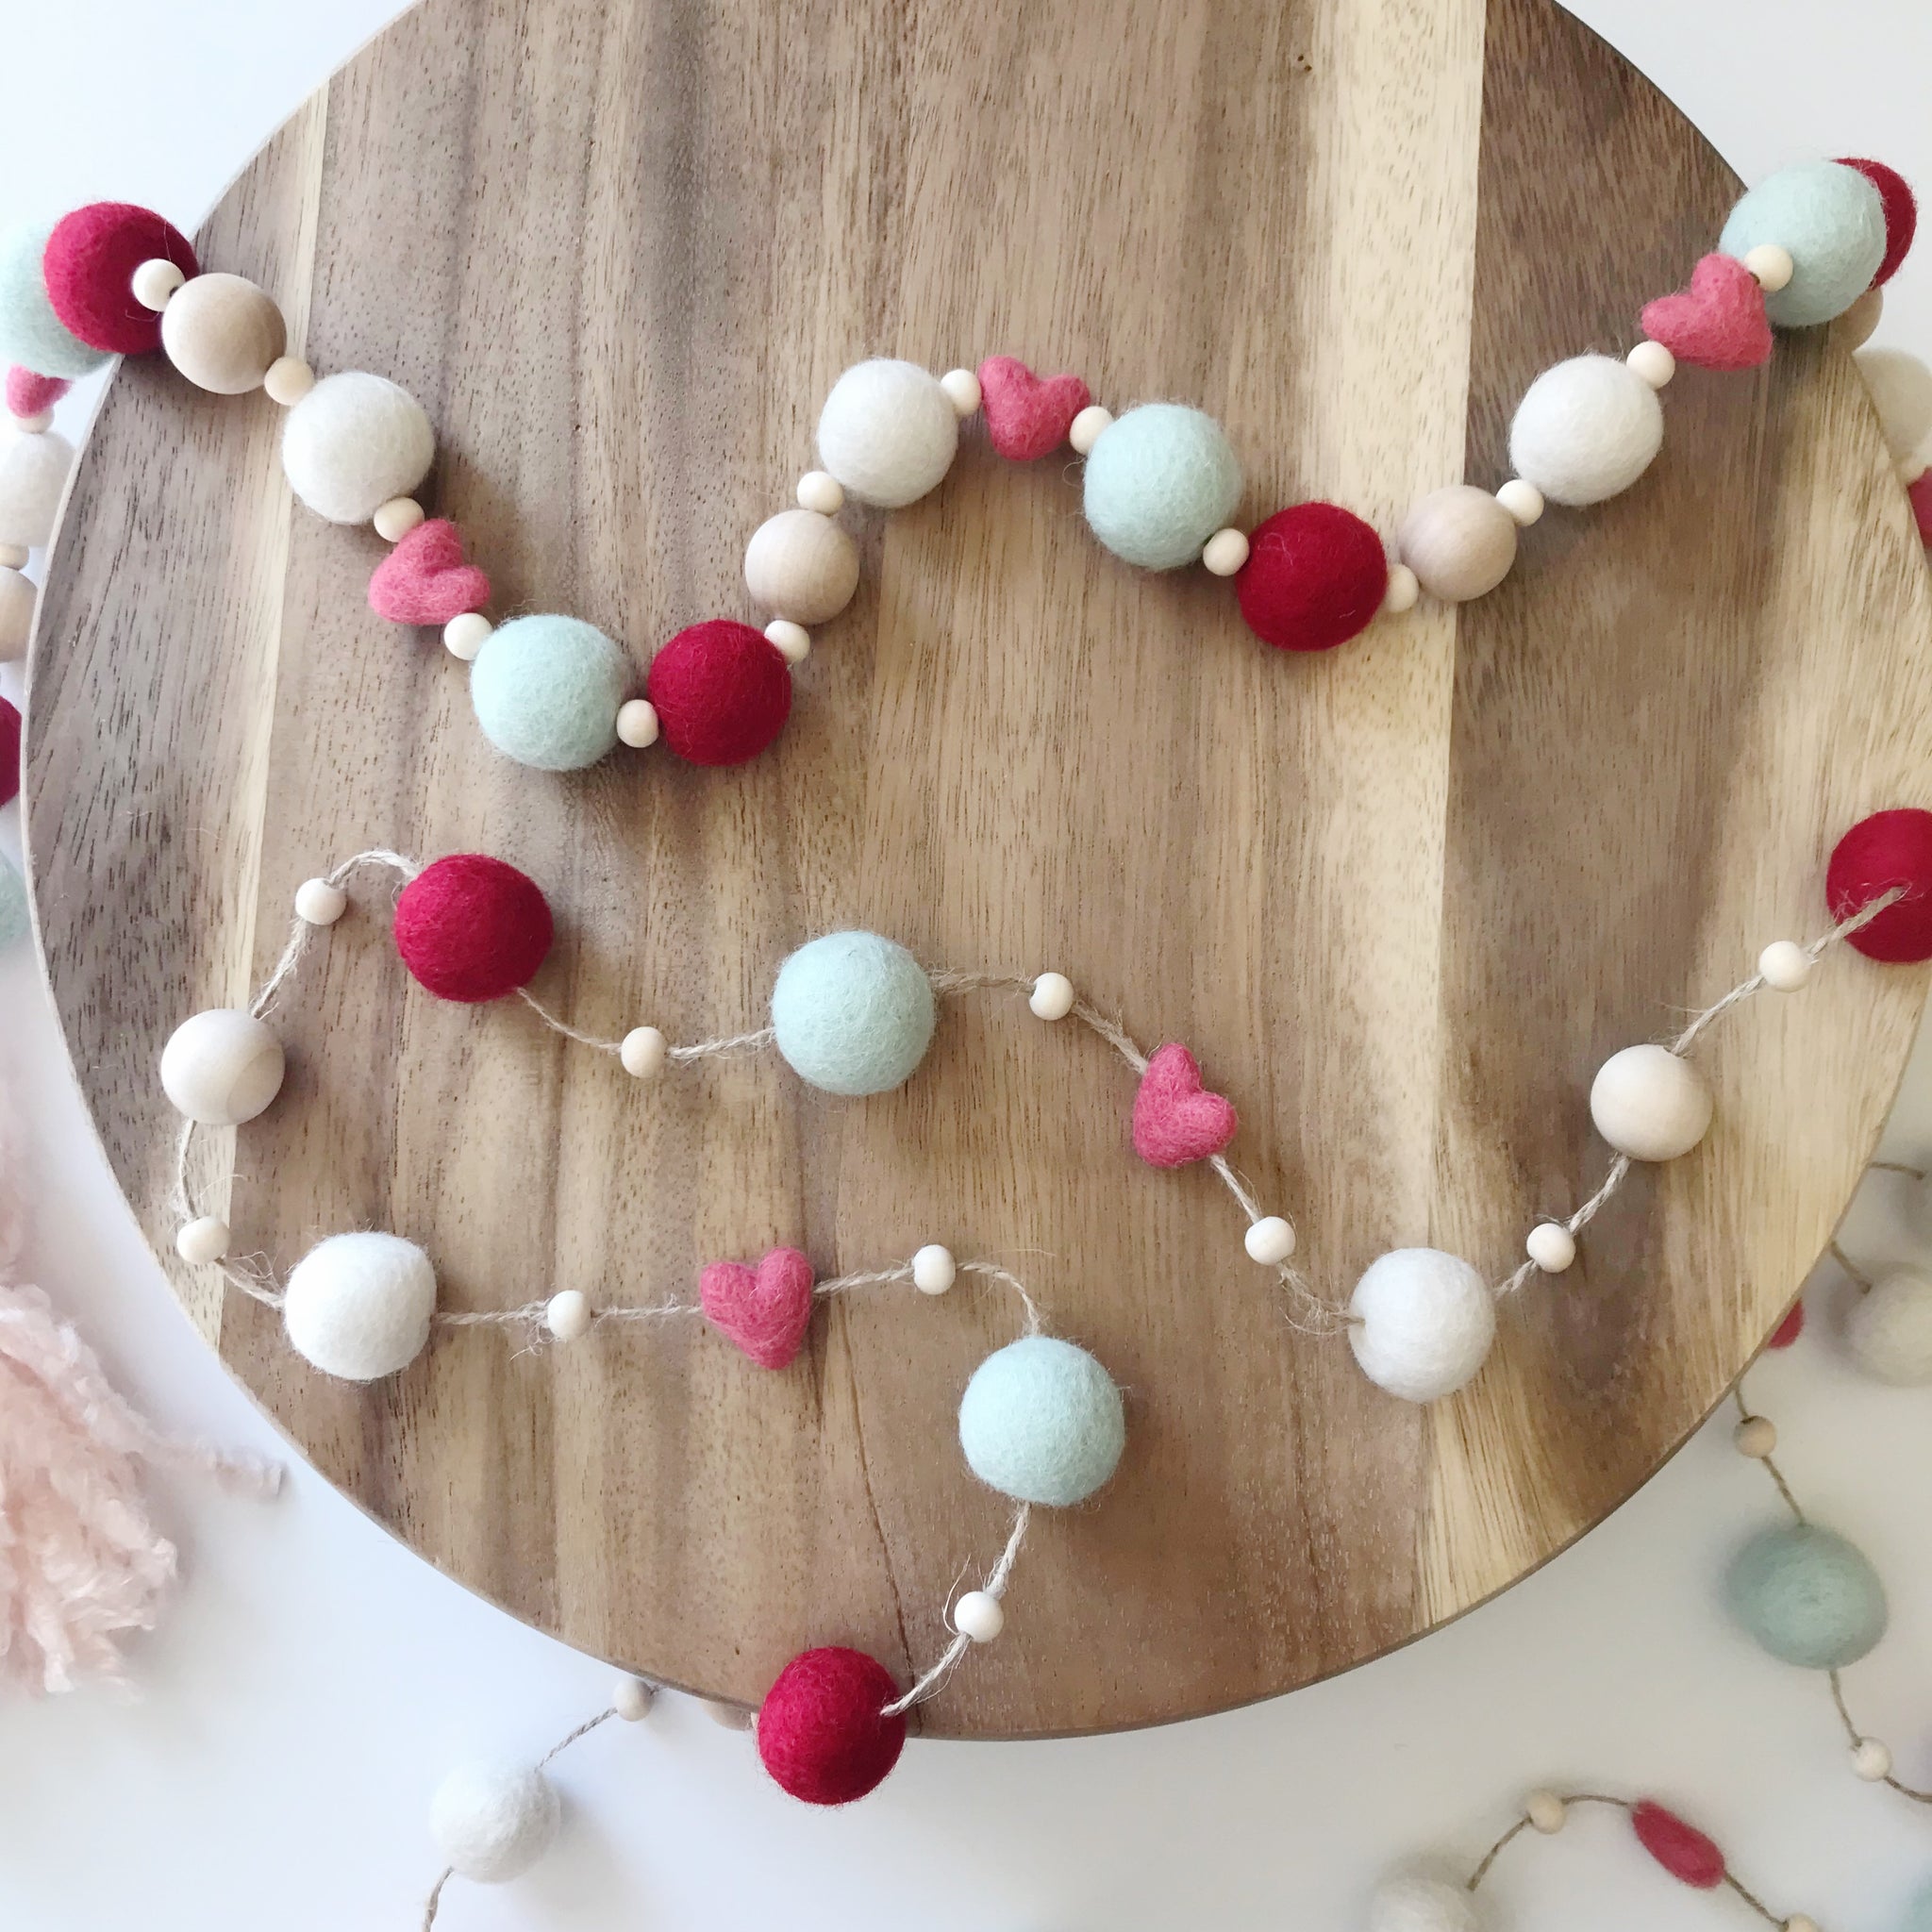 Craft me Happy!: Craftmehappy Joyful Wreath #4 - Needle Felted Beads or  Balls